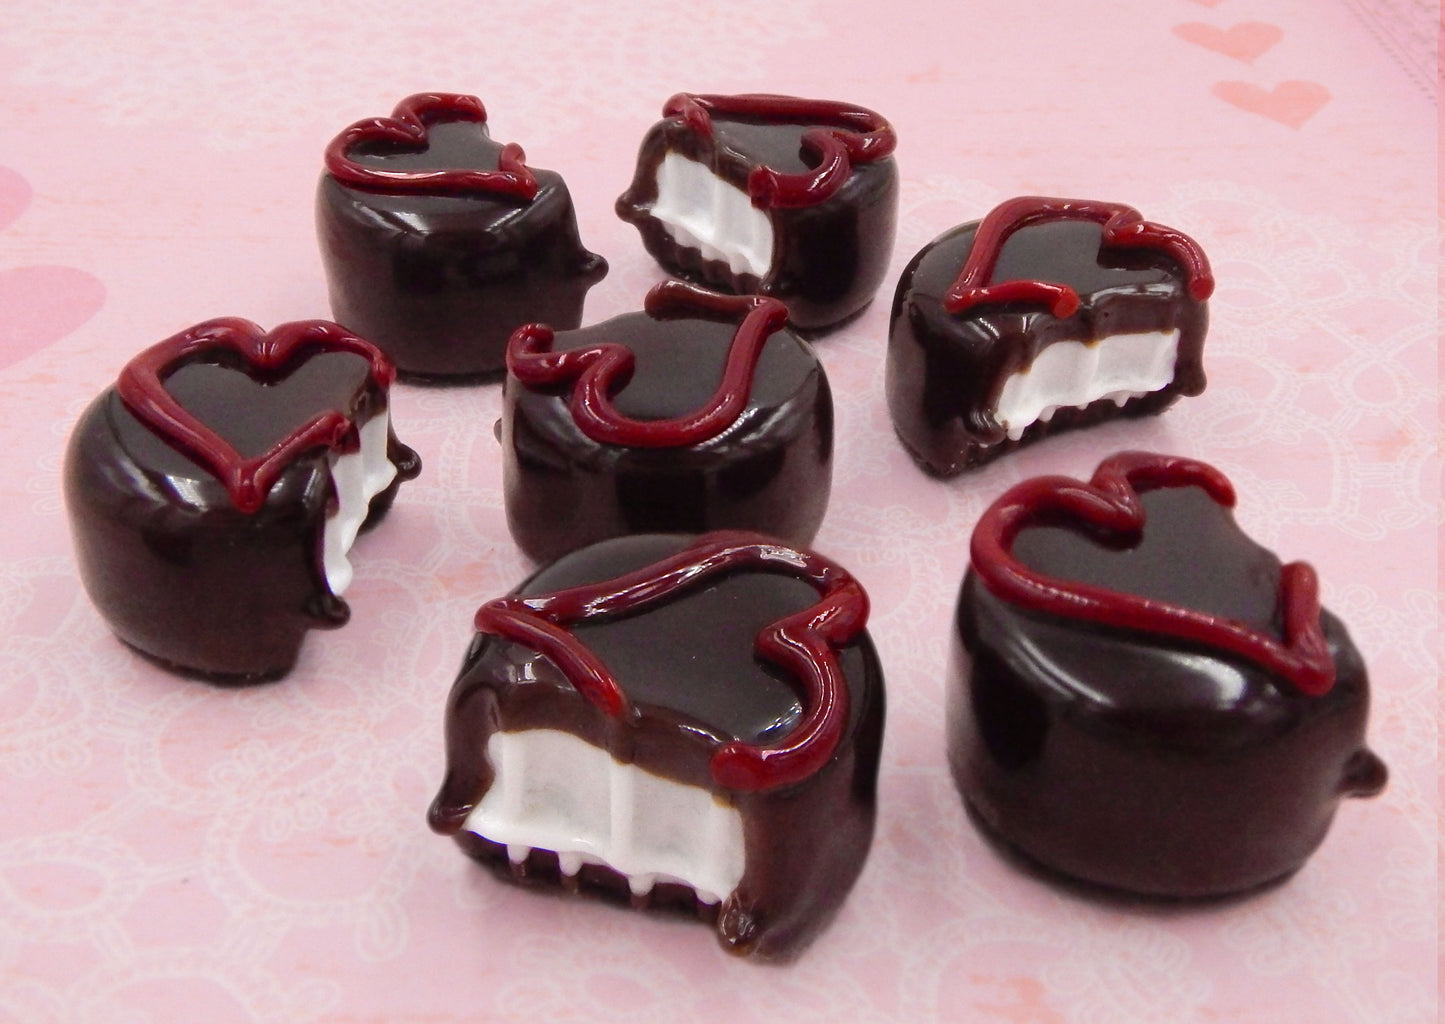 Bitten Chocolate with Dark Cherry Red Heart (B14-011CHW)